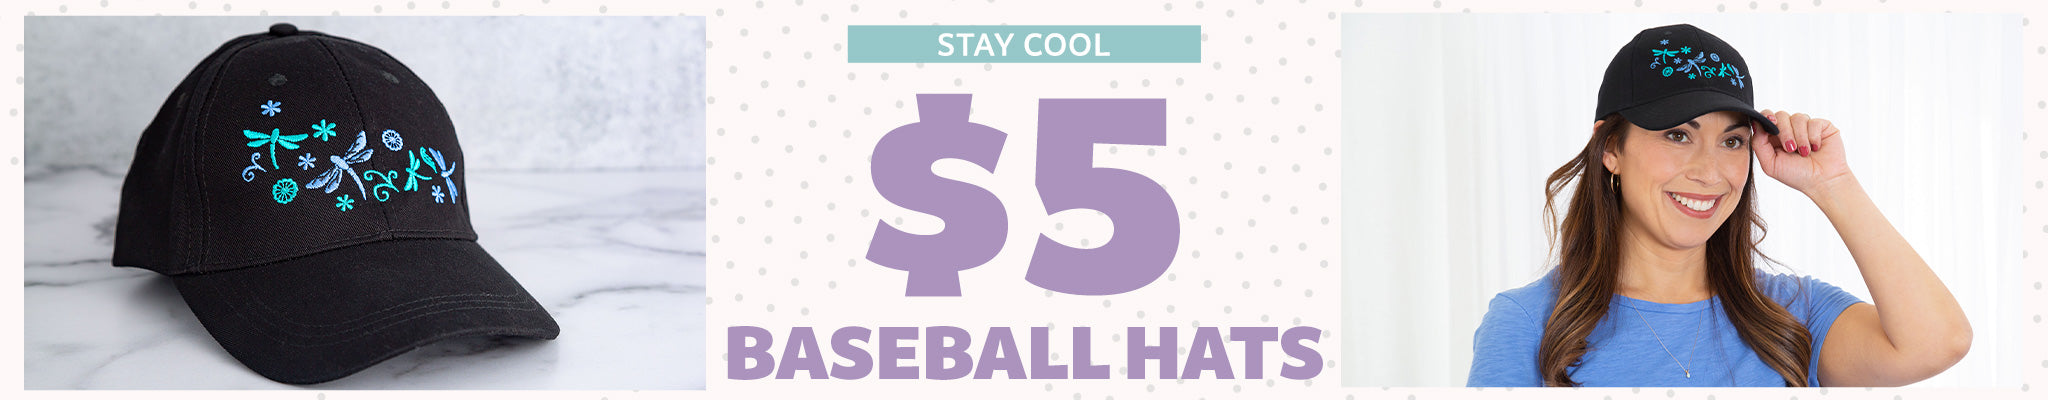 Stay Cool | $5 Baseball Hats 